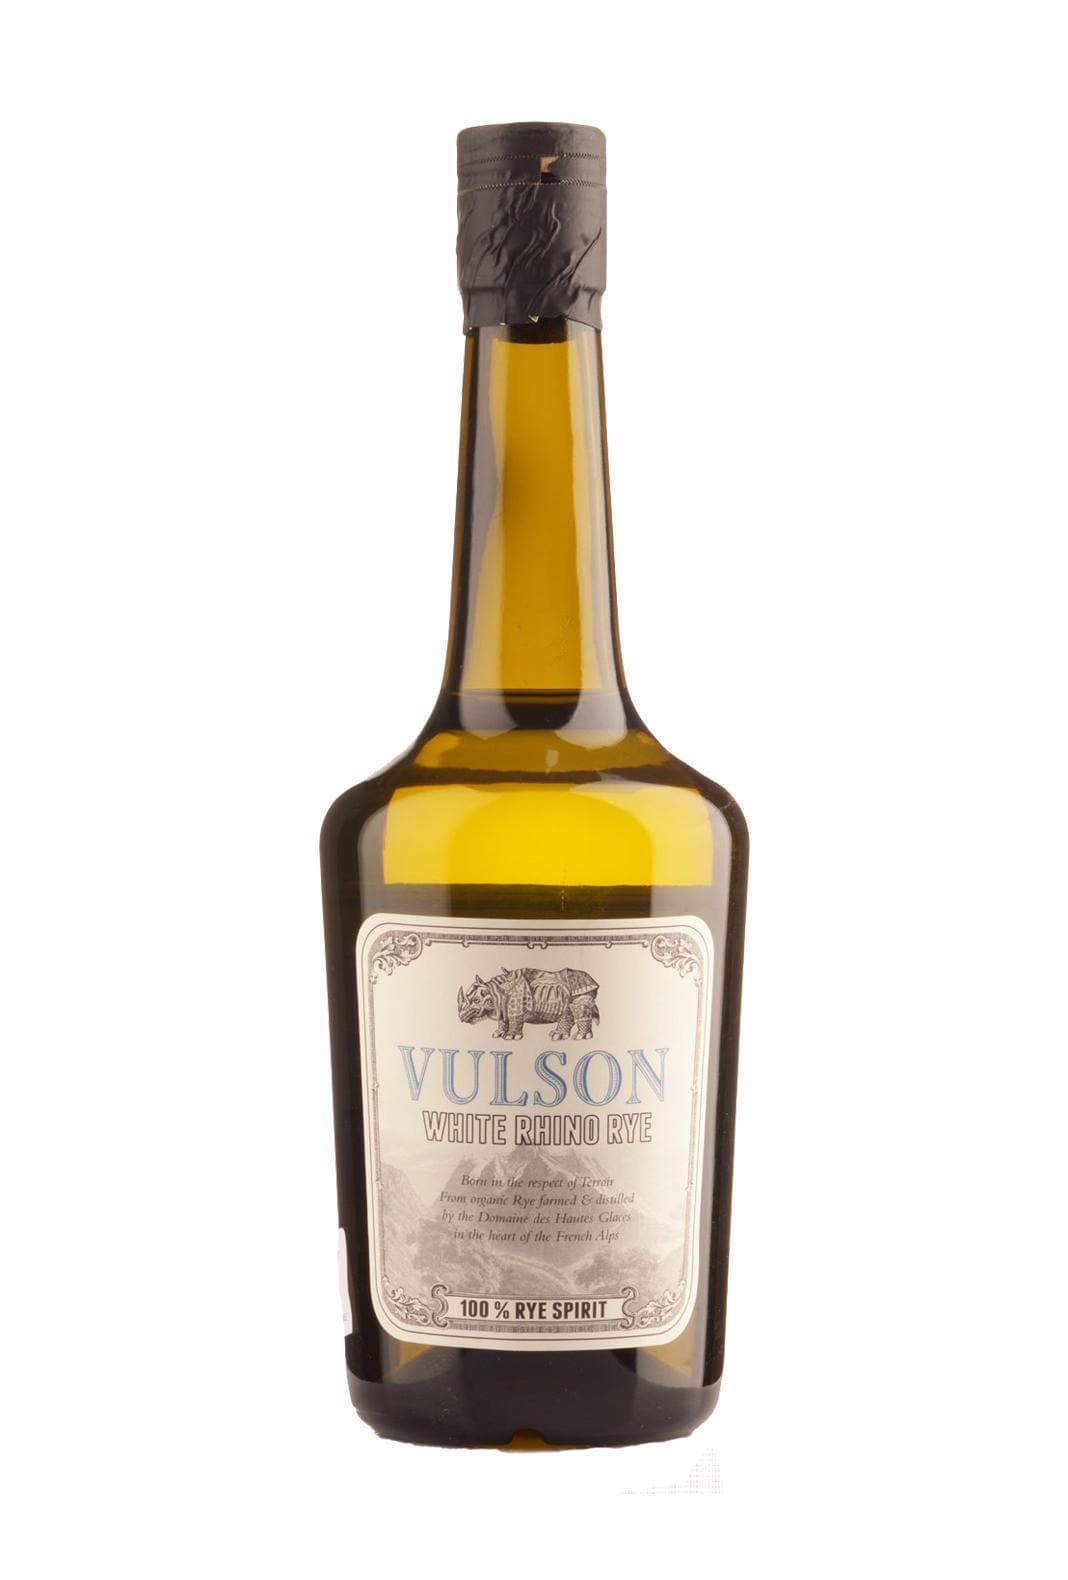 Domaine Des Hautes Glaces Rye Whisky Vulson 'White Rhino' 41% 700ml | Whiskey | Shop online at Spirits of France